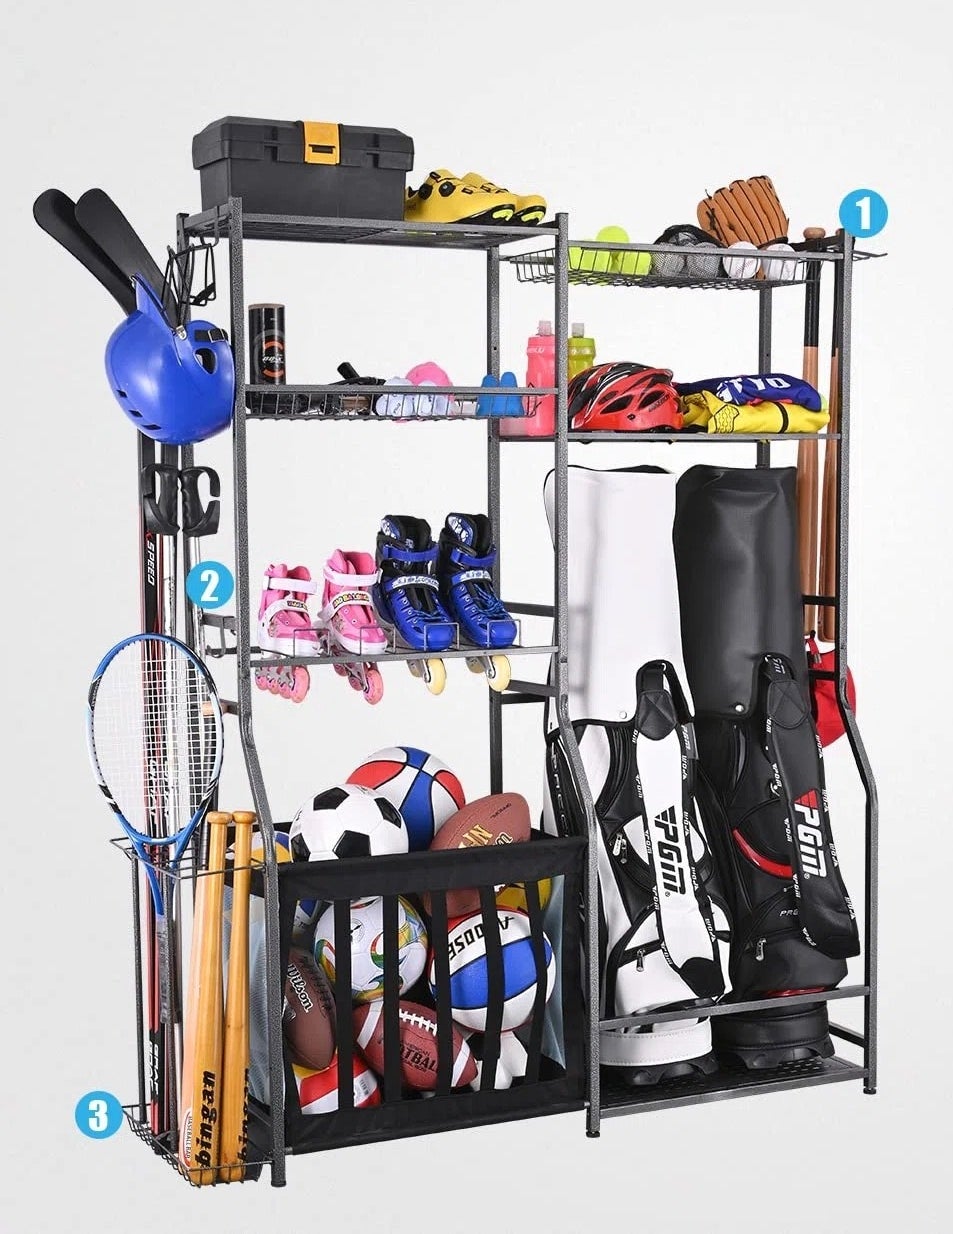 a sports rack holding various sports equipment like helmets, bats, footballs